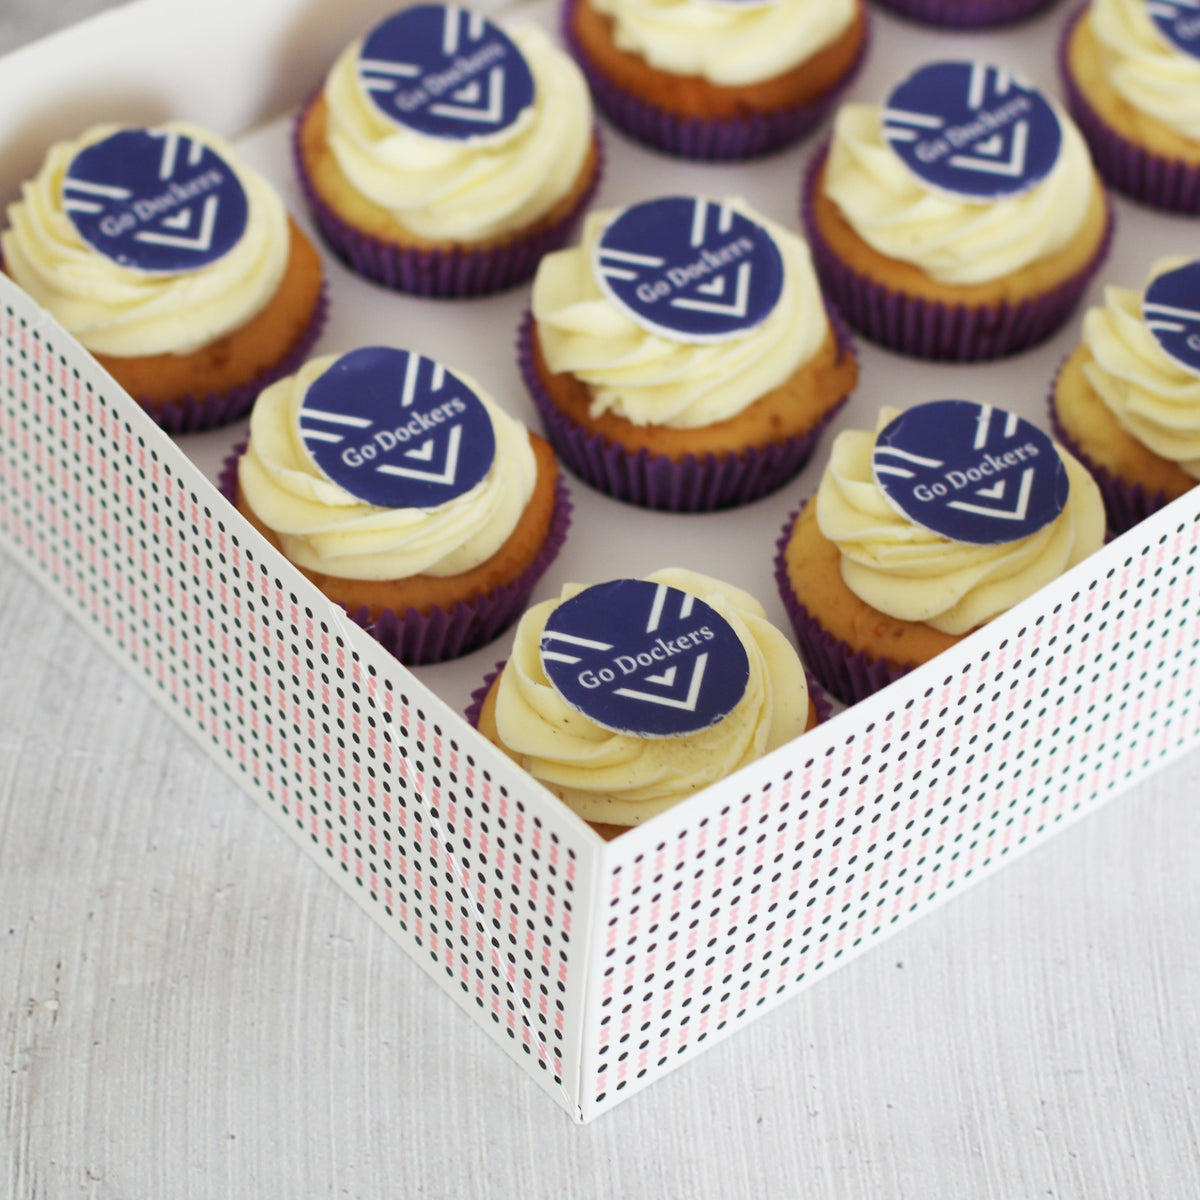 Go Dockers - Football Cupcakes Cupcakes The Cupcake Queens 